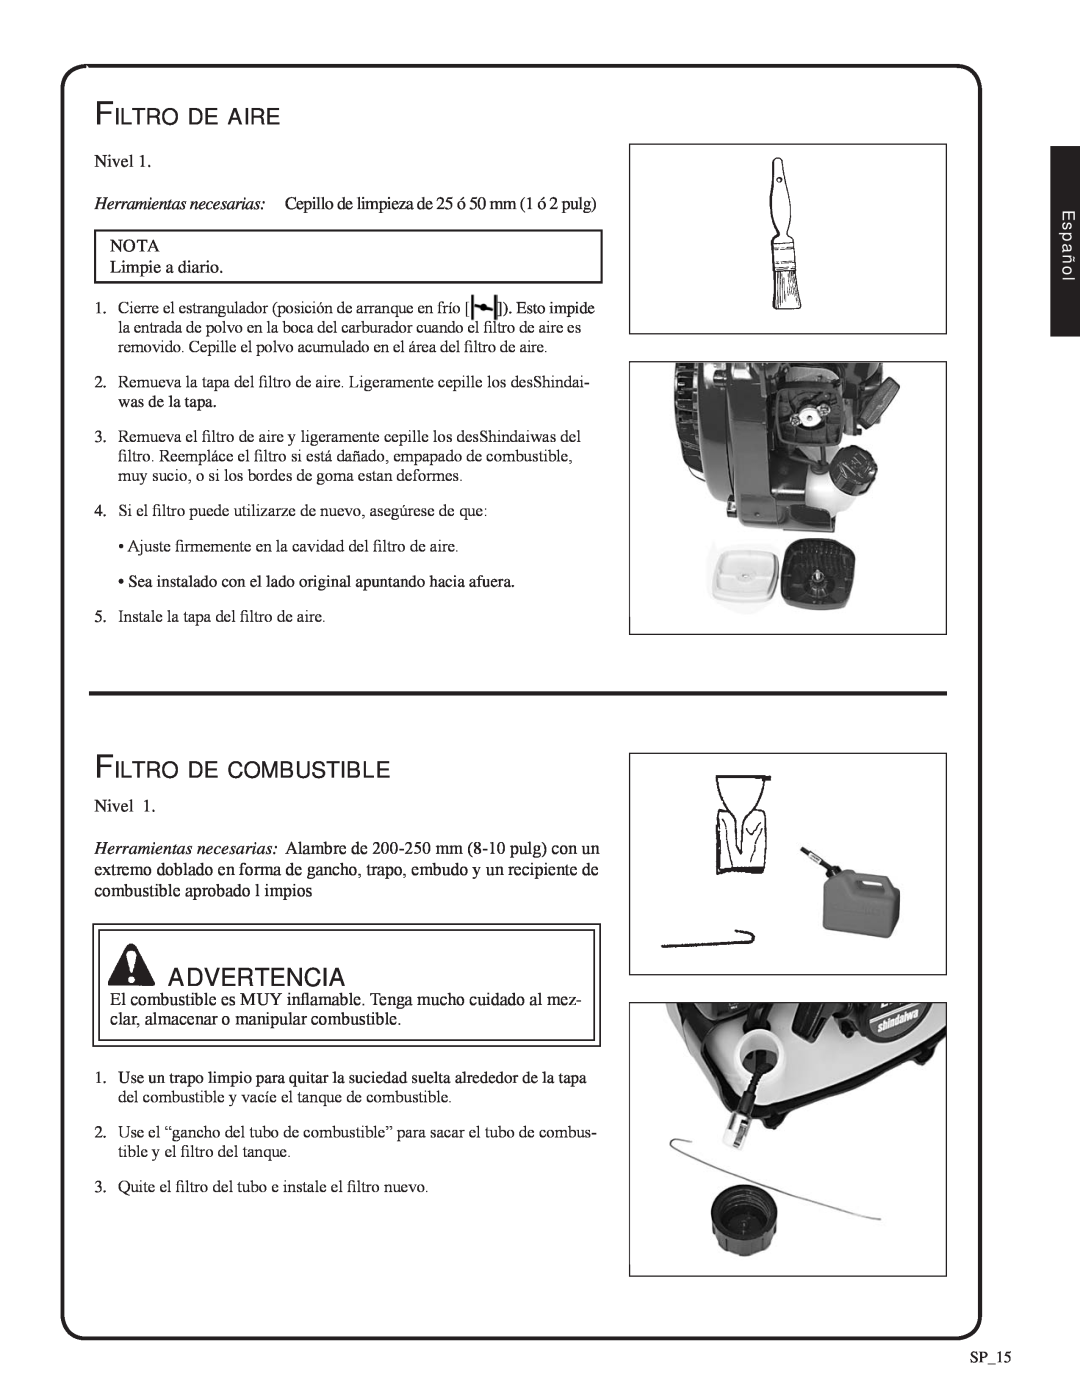 Shindaiwa 82051, EB212 manual advertencia, Filtro de aire, Filtro de combustible, Nivel, Nota, Español 